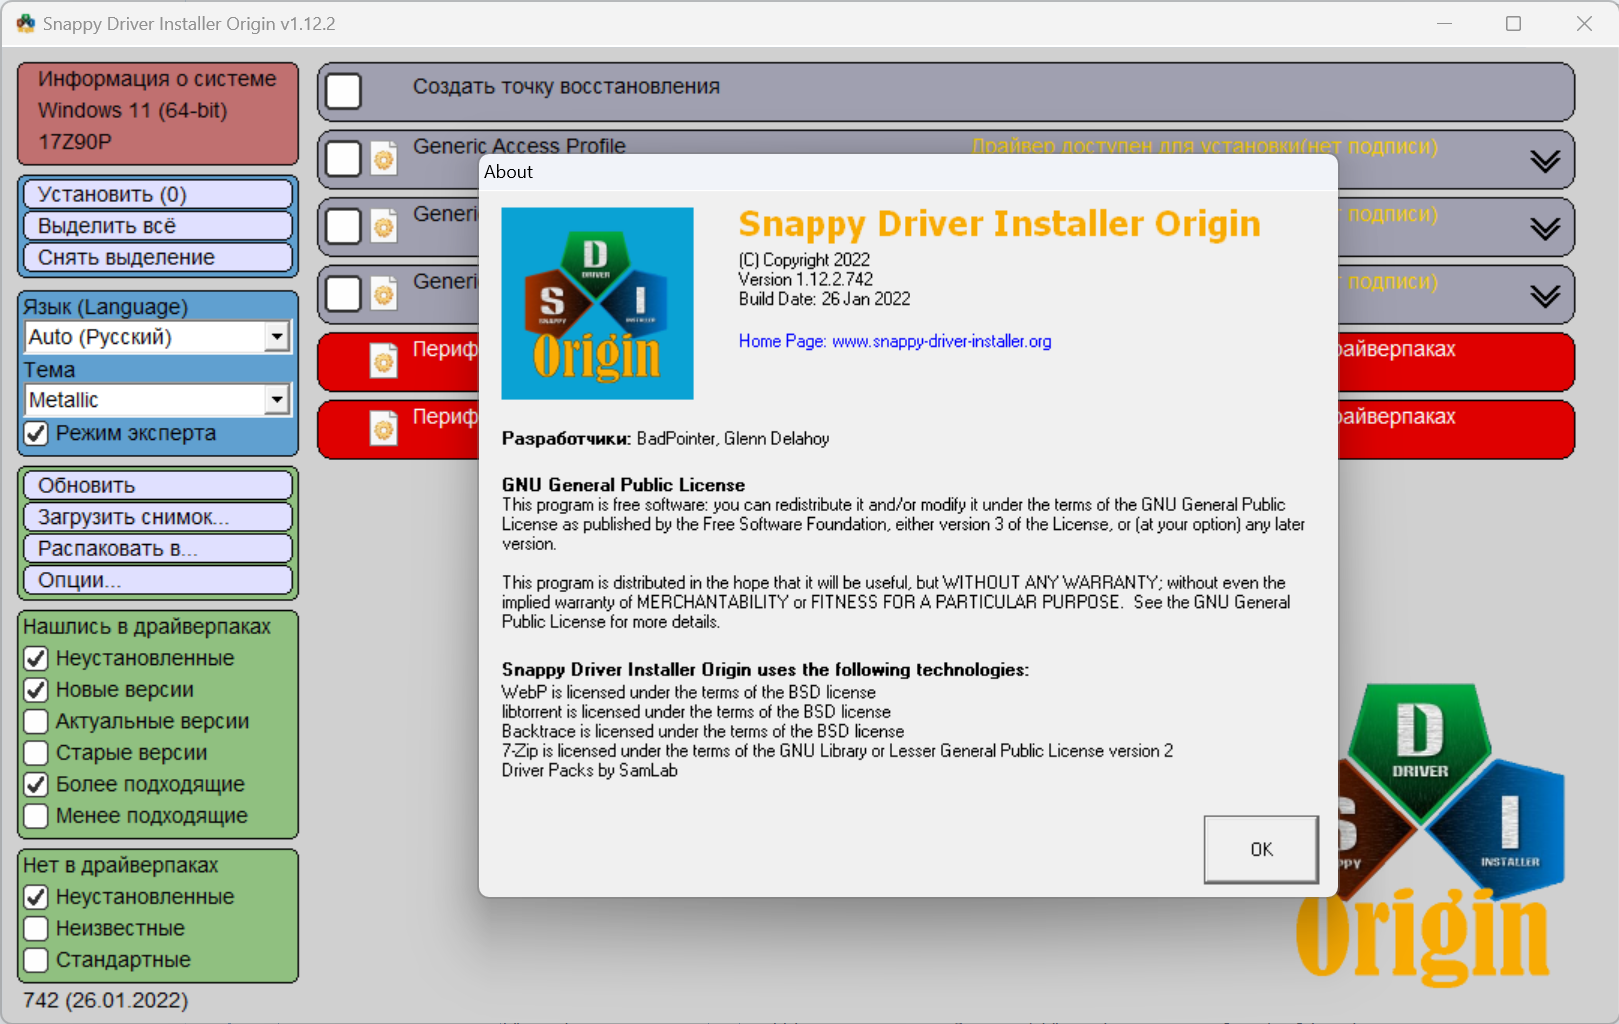 Snappy Driver Installer Origin R742 / Драйверпаки 22.03.4 [Multi/Ru]